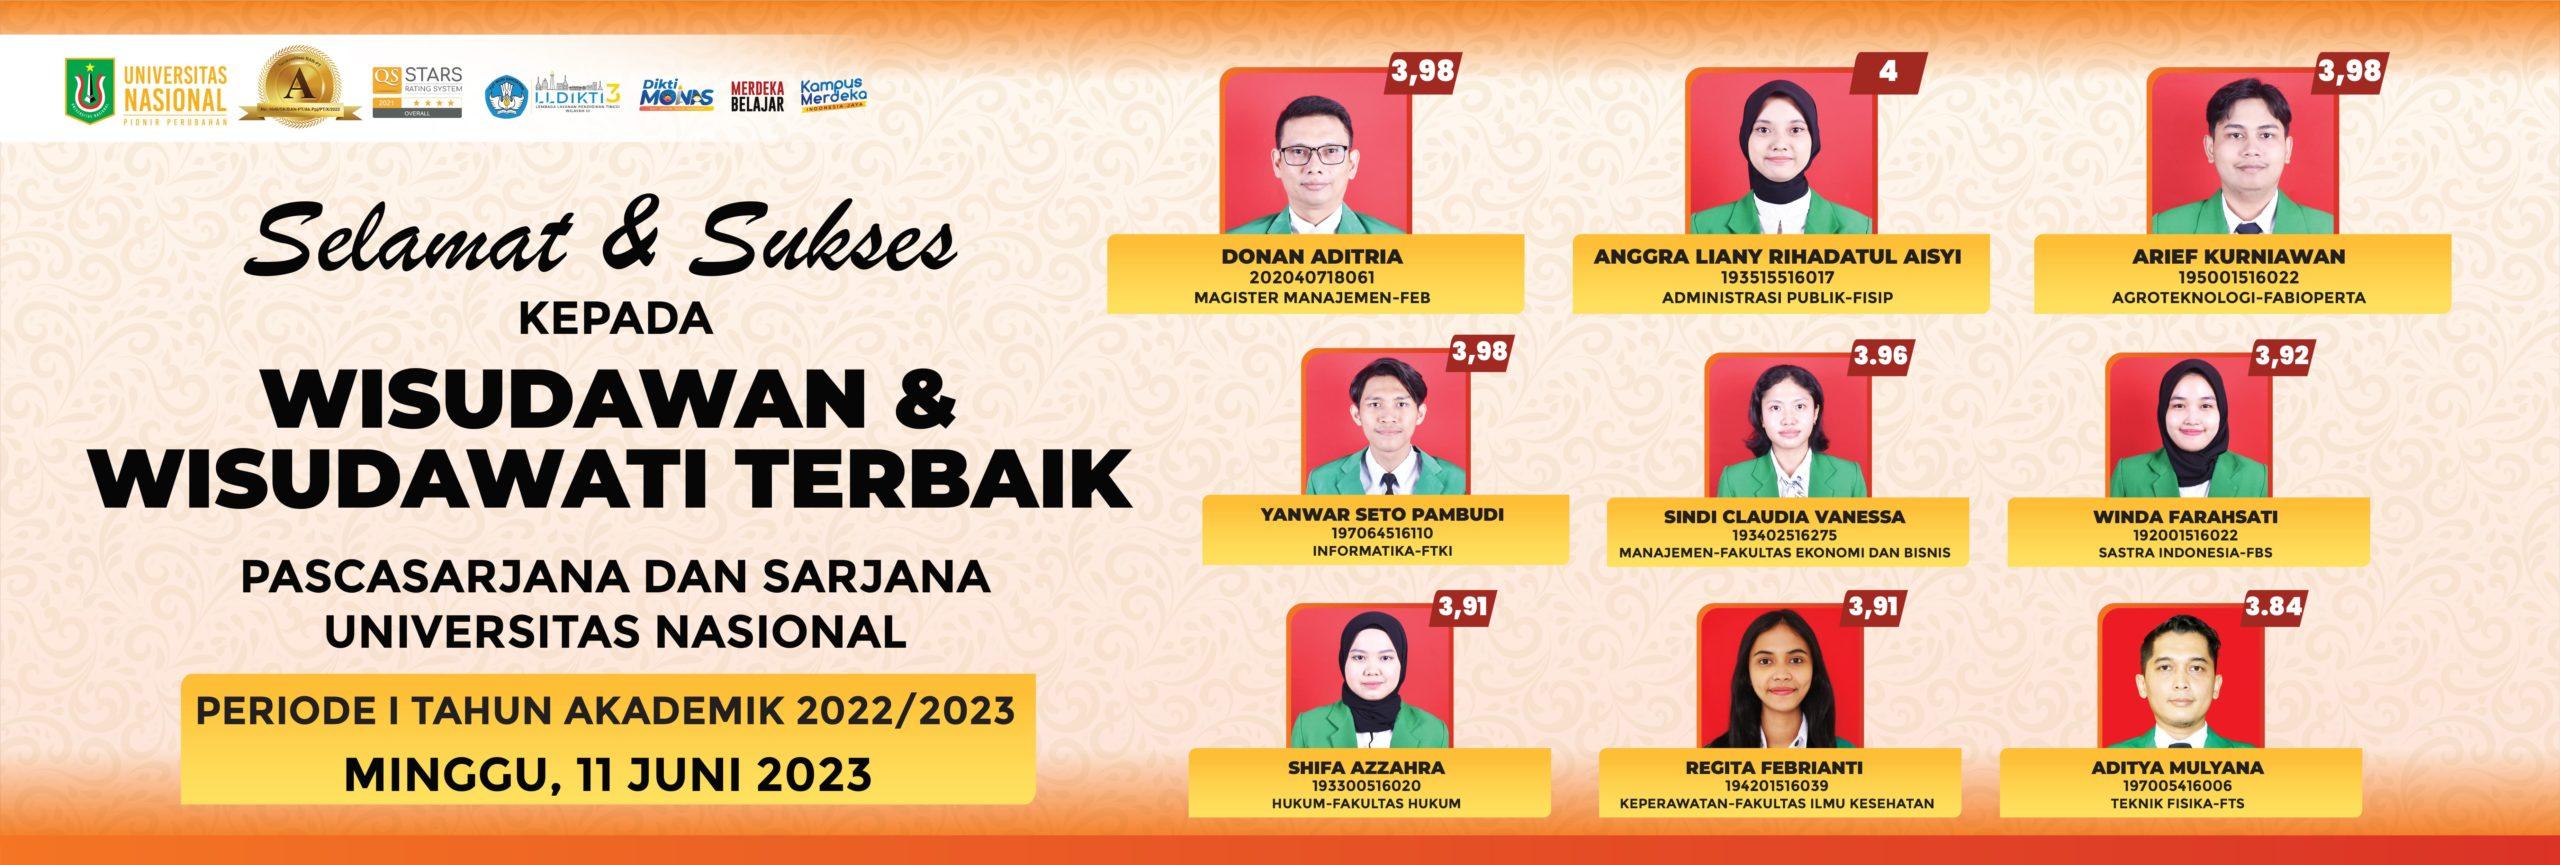 Wisudawan dan Wisudawati terbaik UNAS Periode I T.A. 2022/2023